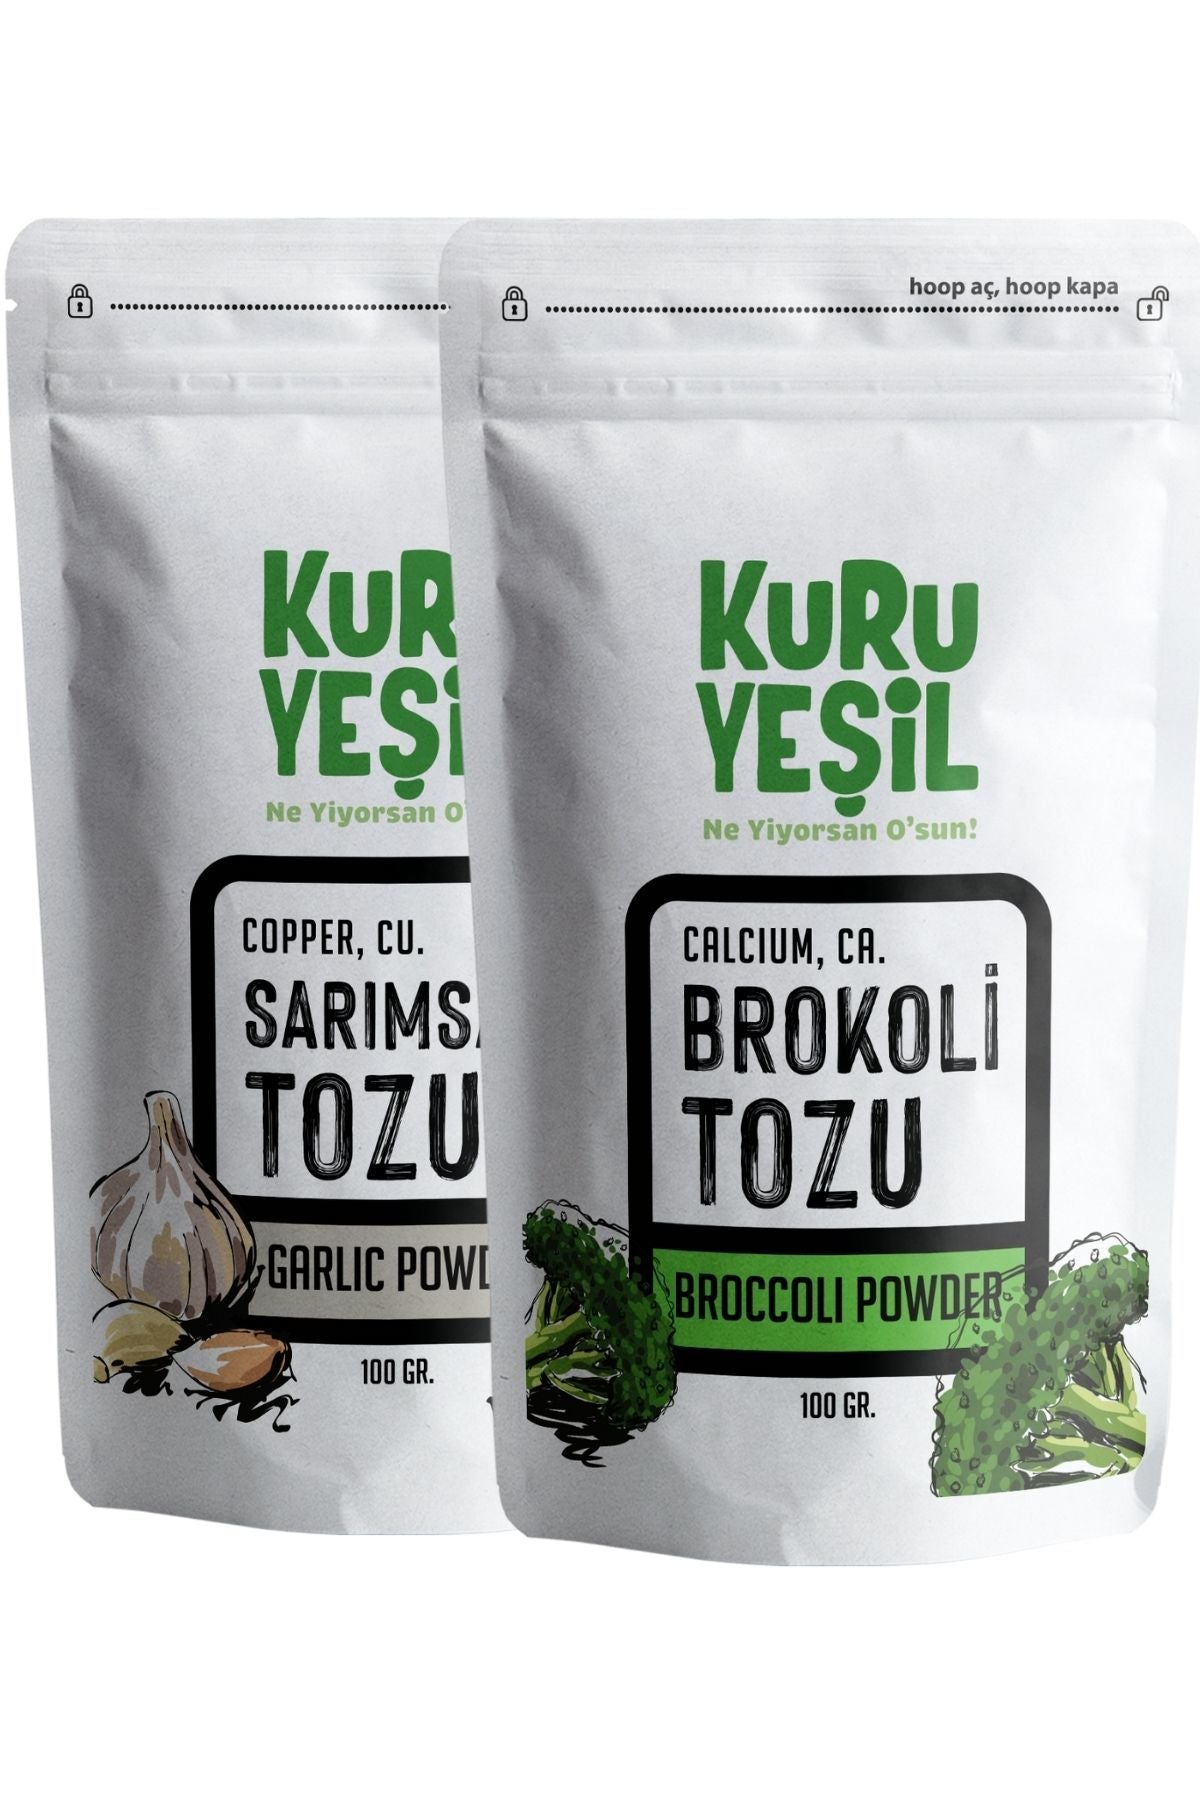 kuru yeşil garlic powder 100g and broccoli powder 100g 1